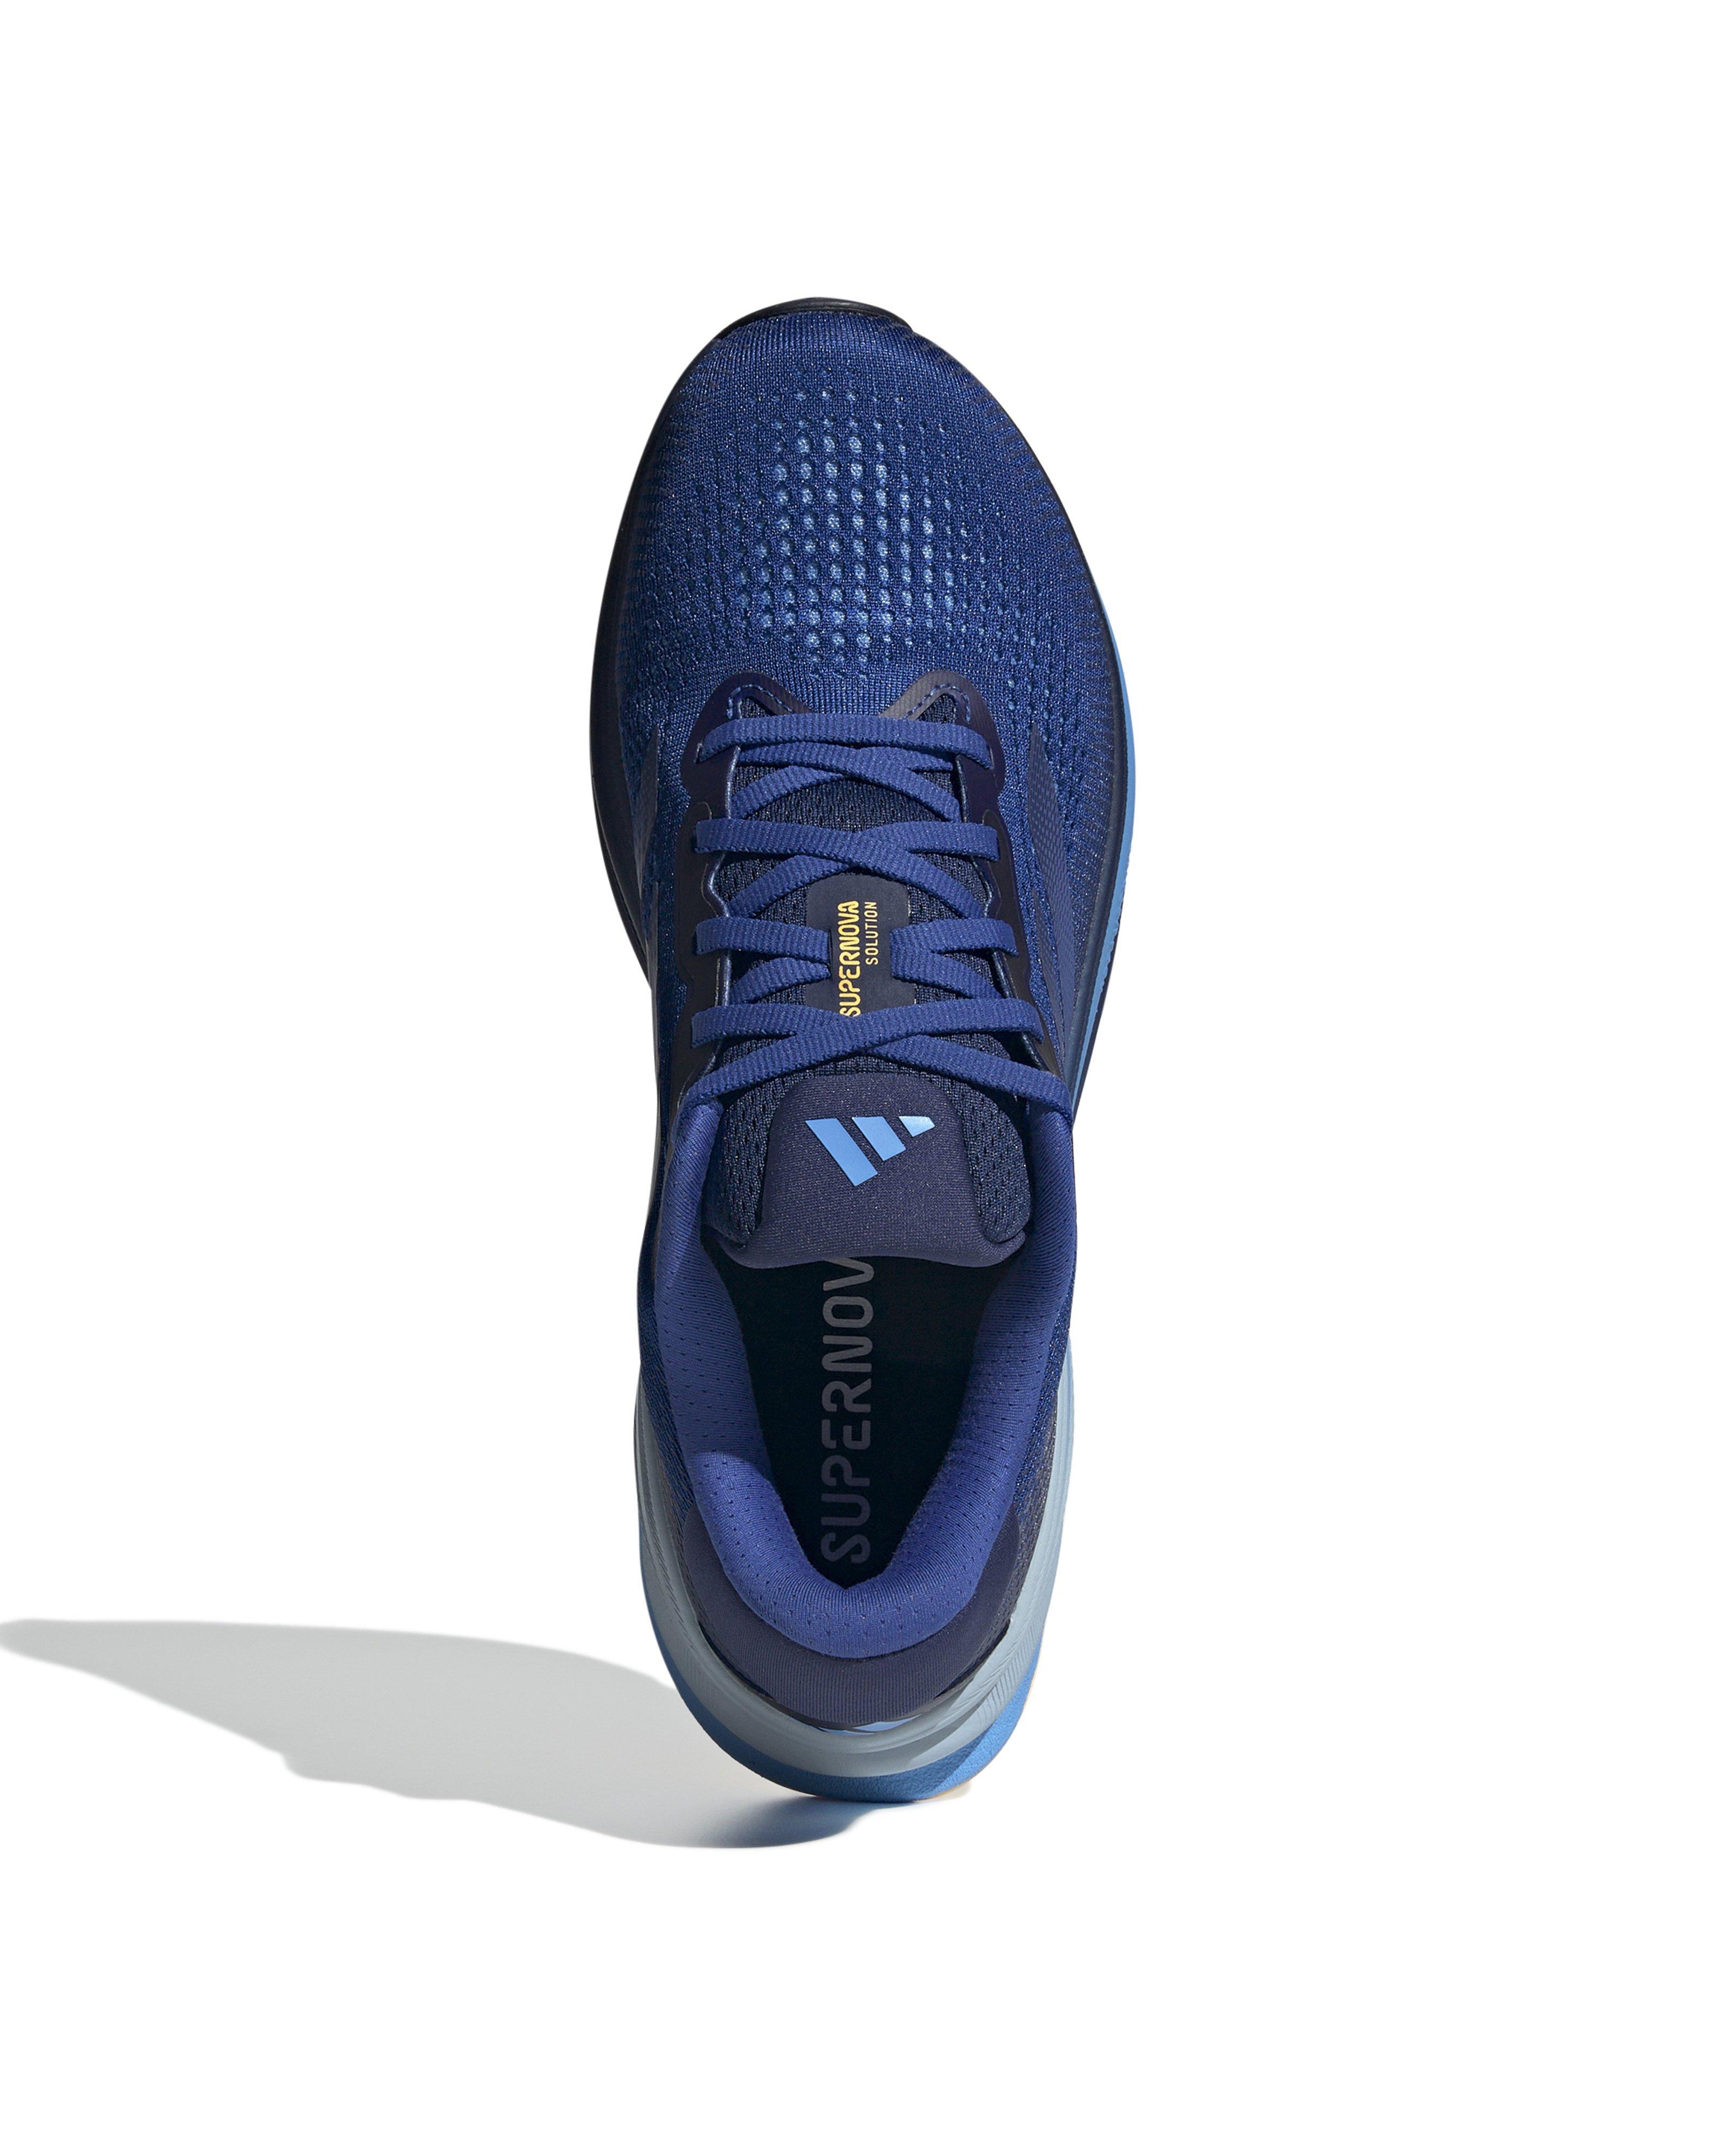 Adidas Men’s Supernova Solution Running Shoes -  Royal